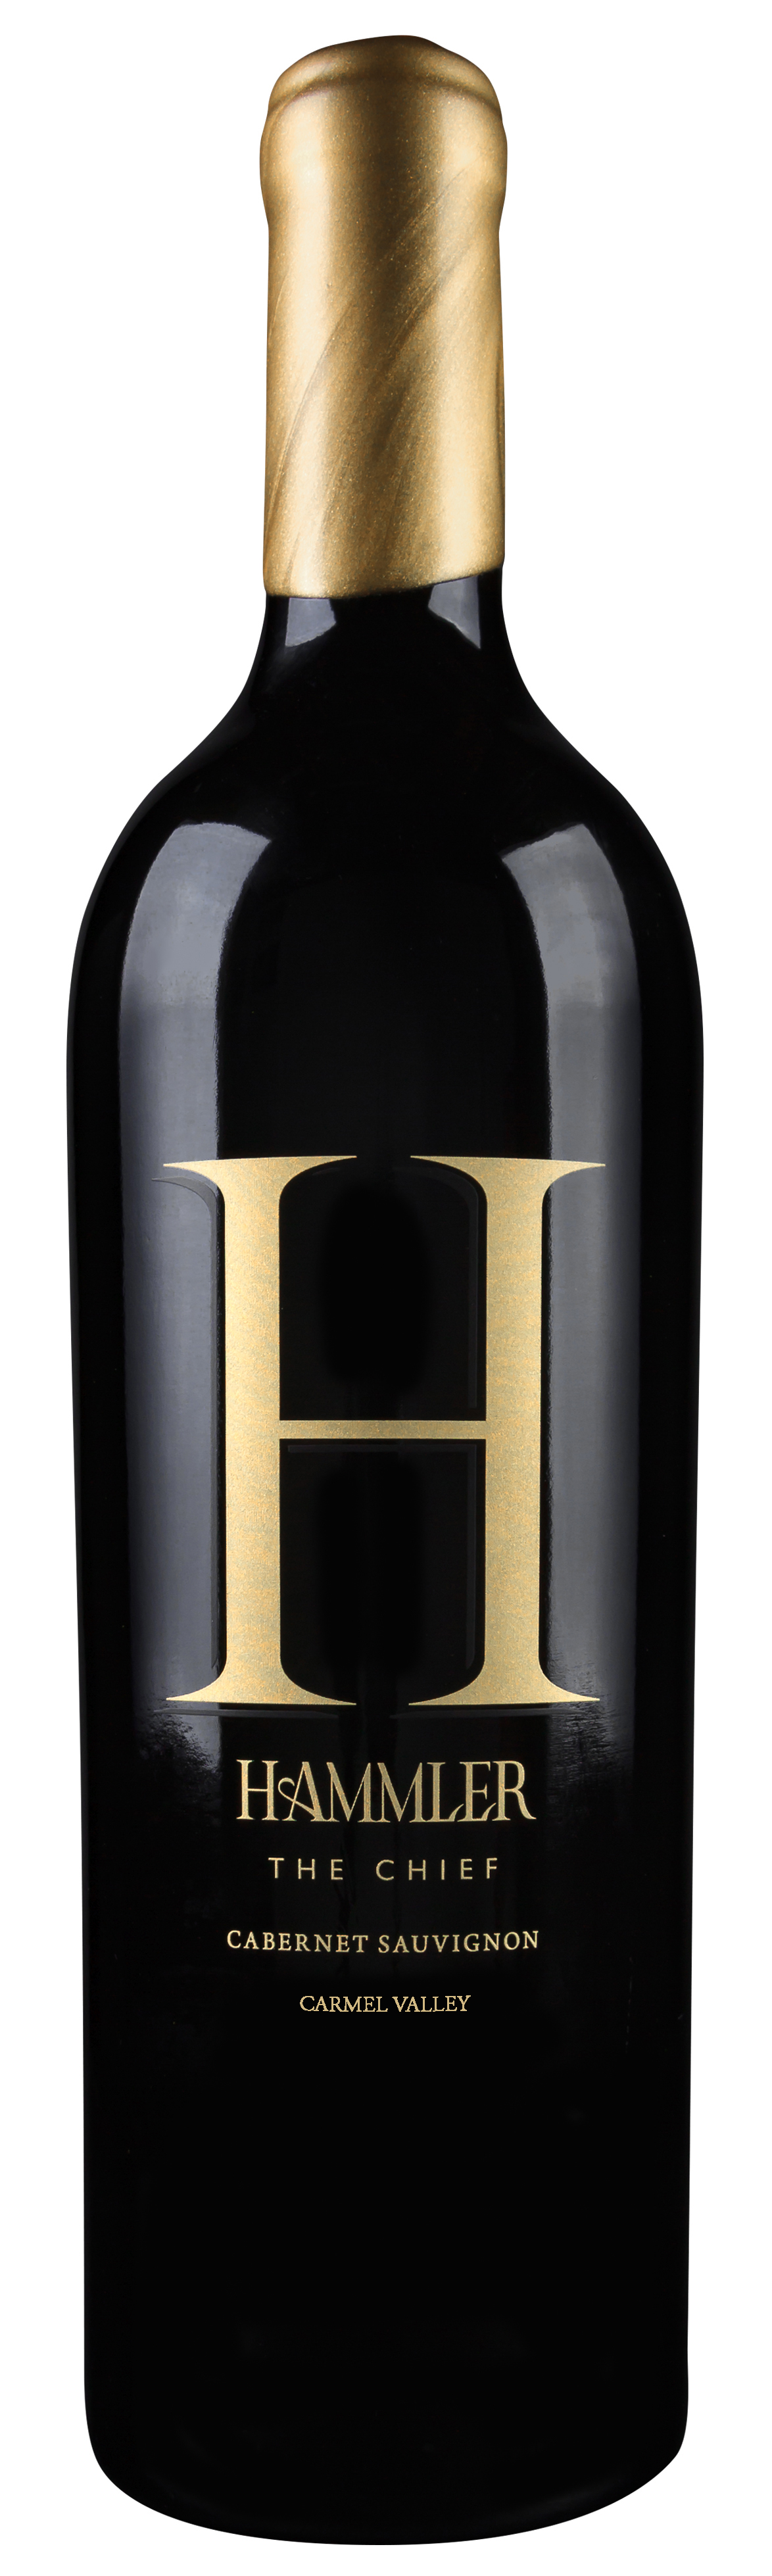 Product Image for 2015 Hammler Cabernet Sauvignon 750ml